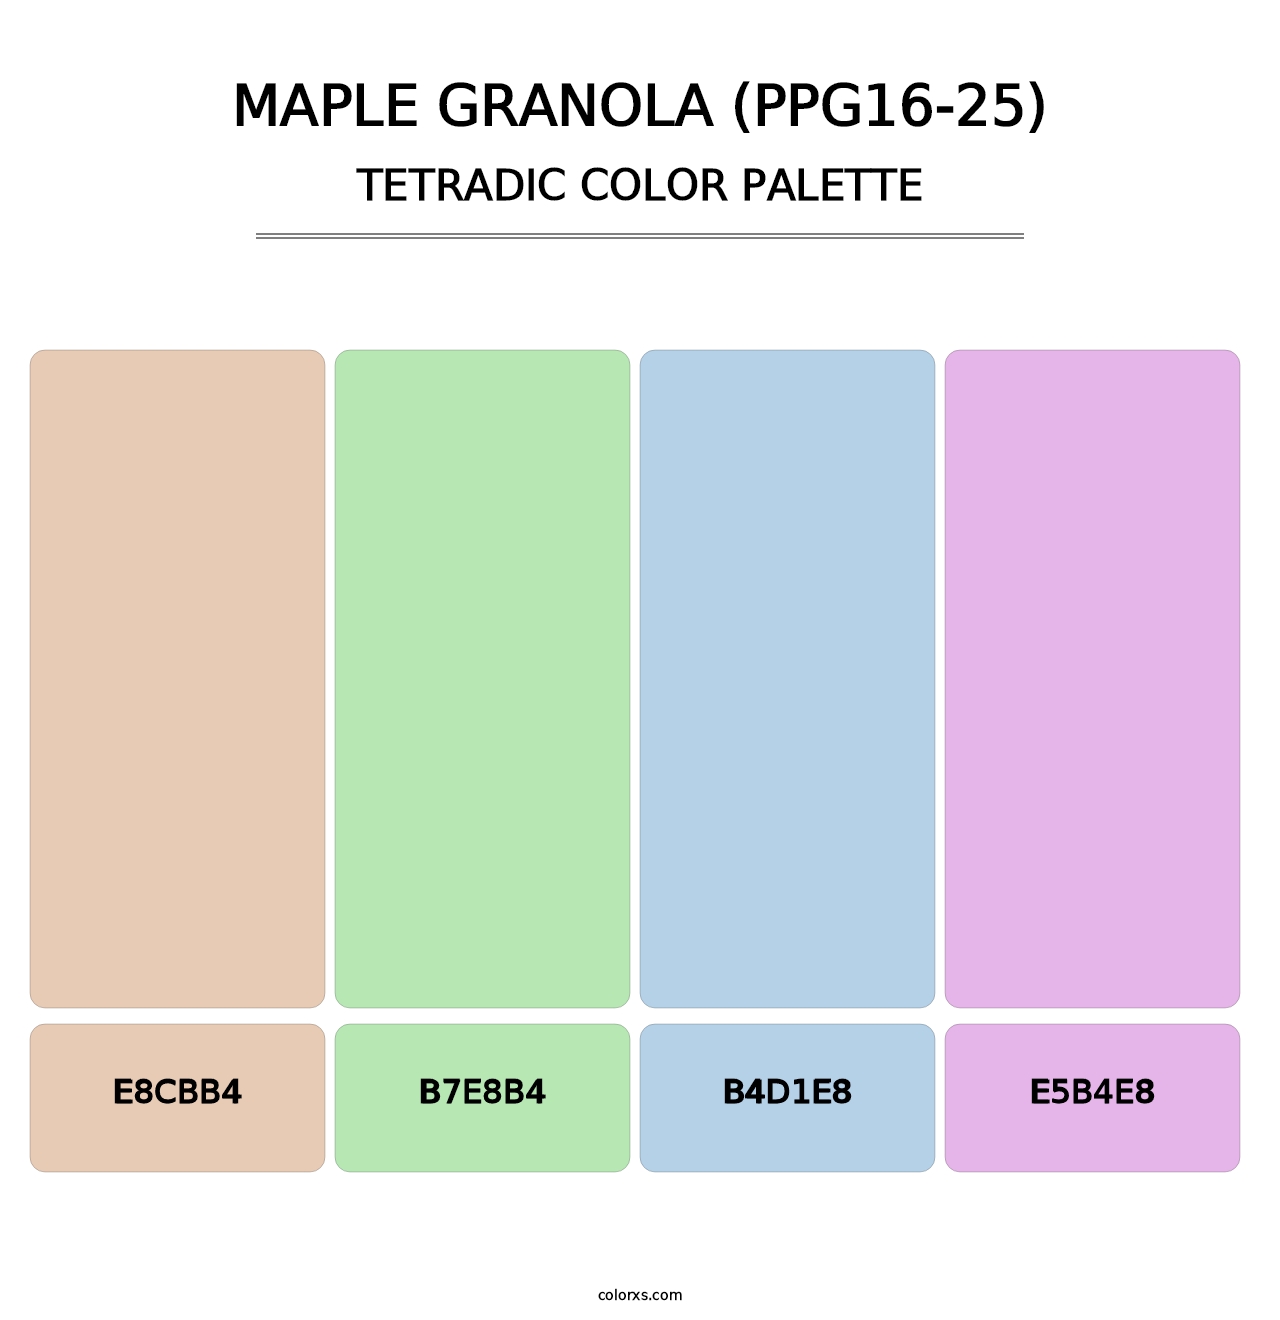 Maple Granola (PPG16-25) - Tetradic Color Palette